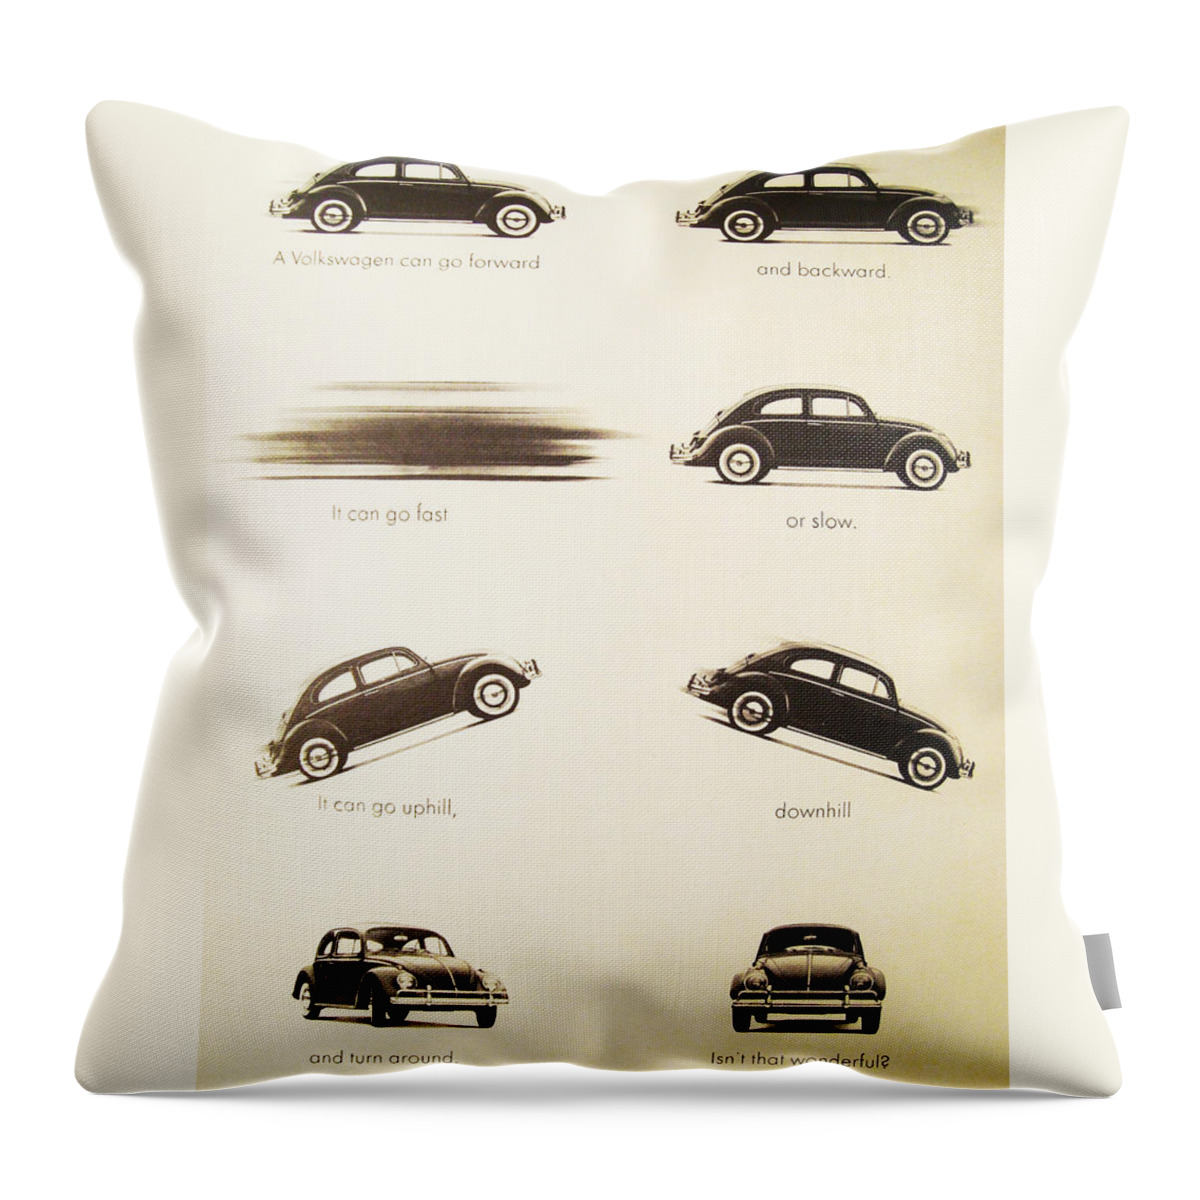 Vw Beetle Throw Pillow featuring the digital art Benefits of a Volkwagen by Georgia Fowler